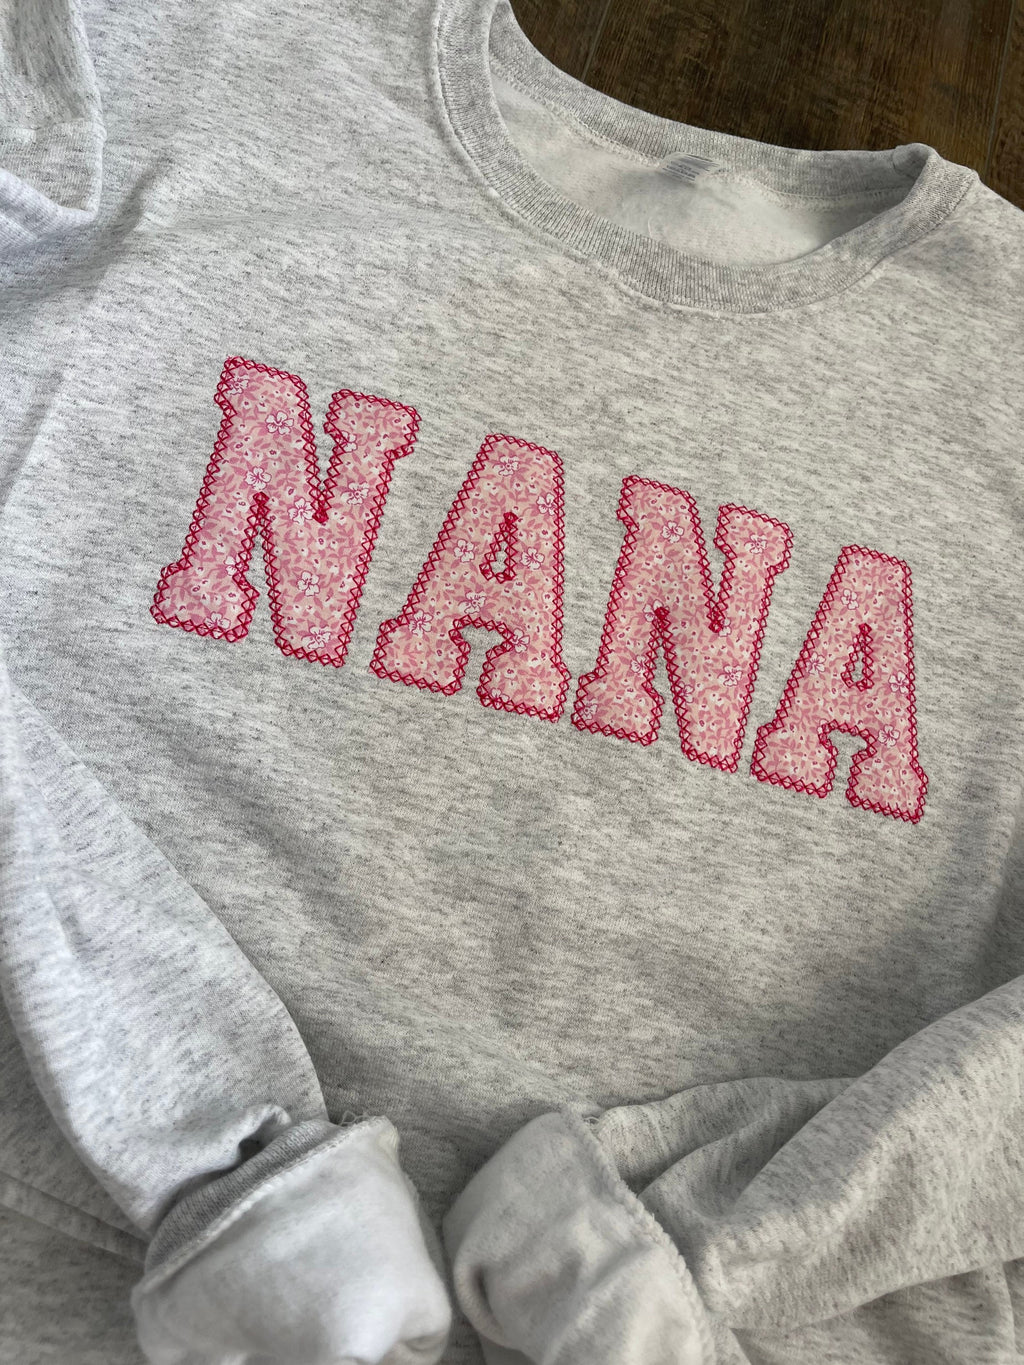 NANA Embroidered Pink Floral Applique Sweatshirt  | Simple NANA Pullover, Gift for Grandma, Personalized Nana Shirt